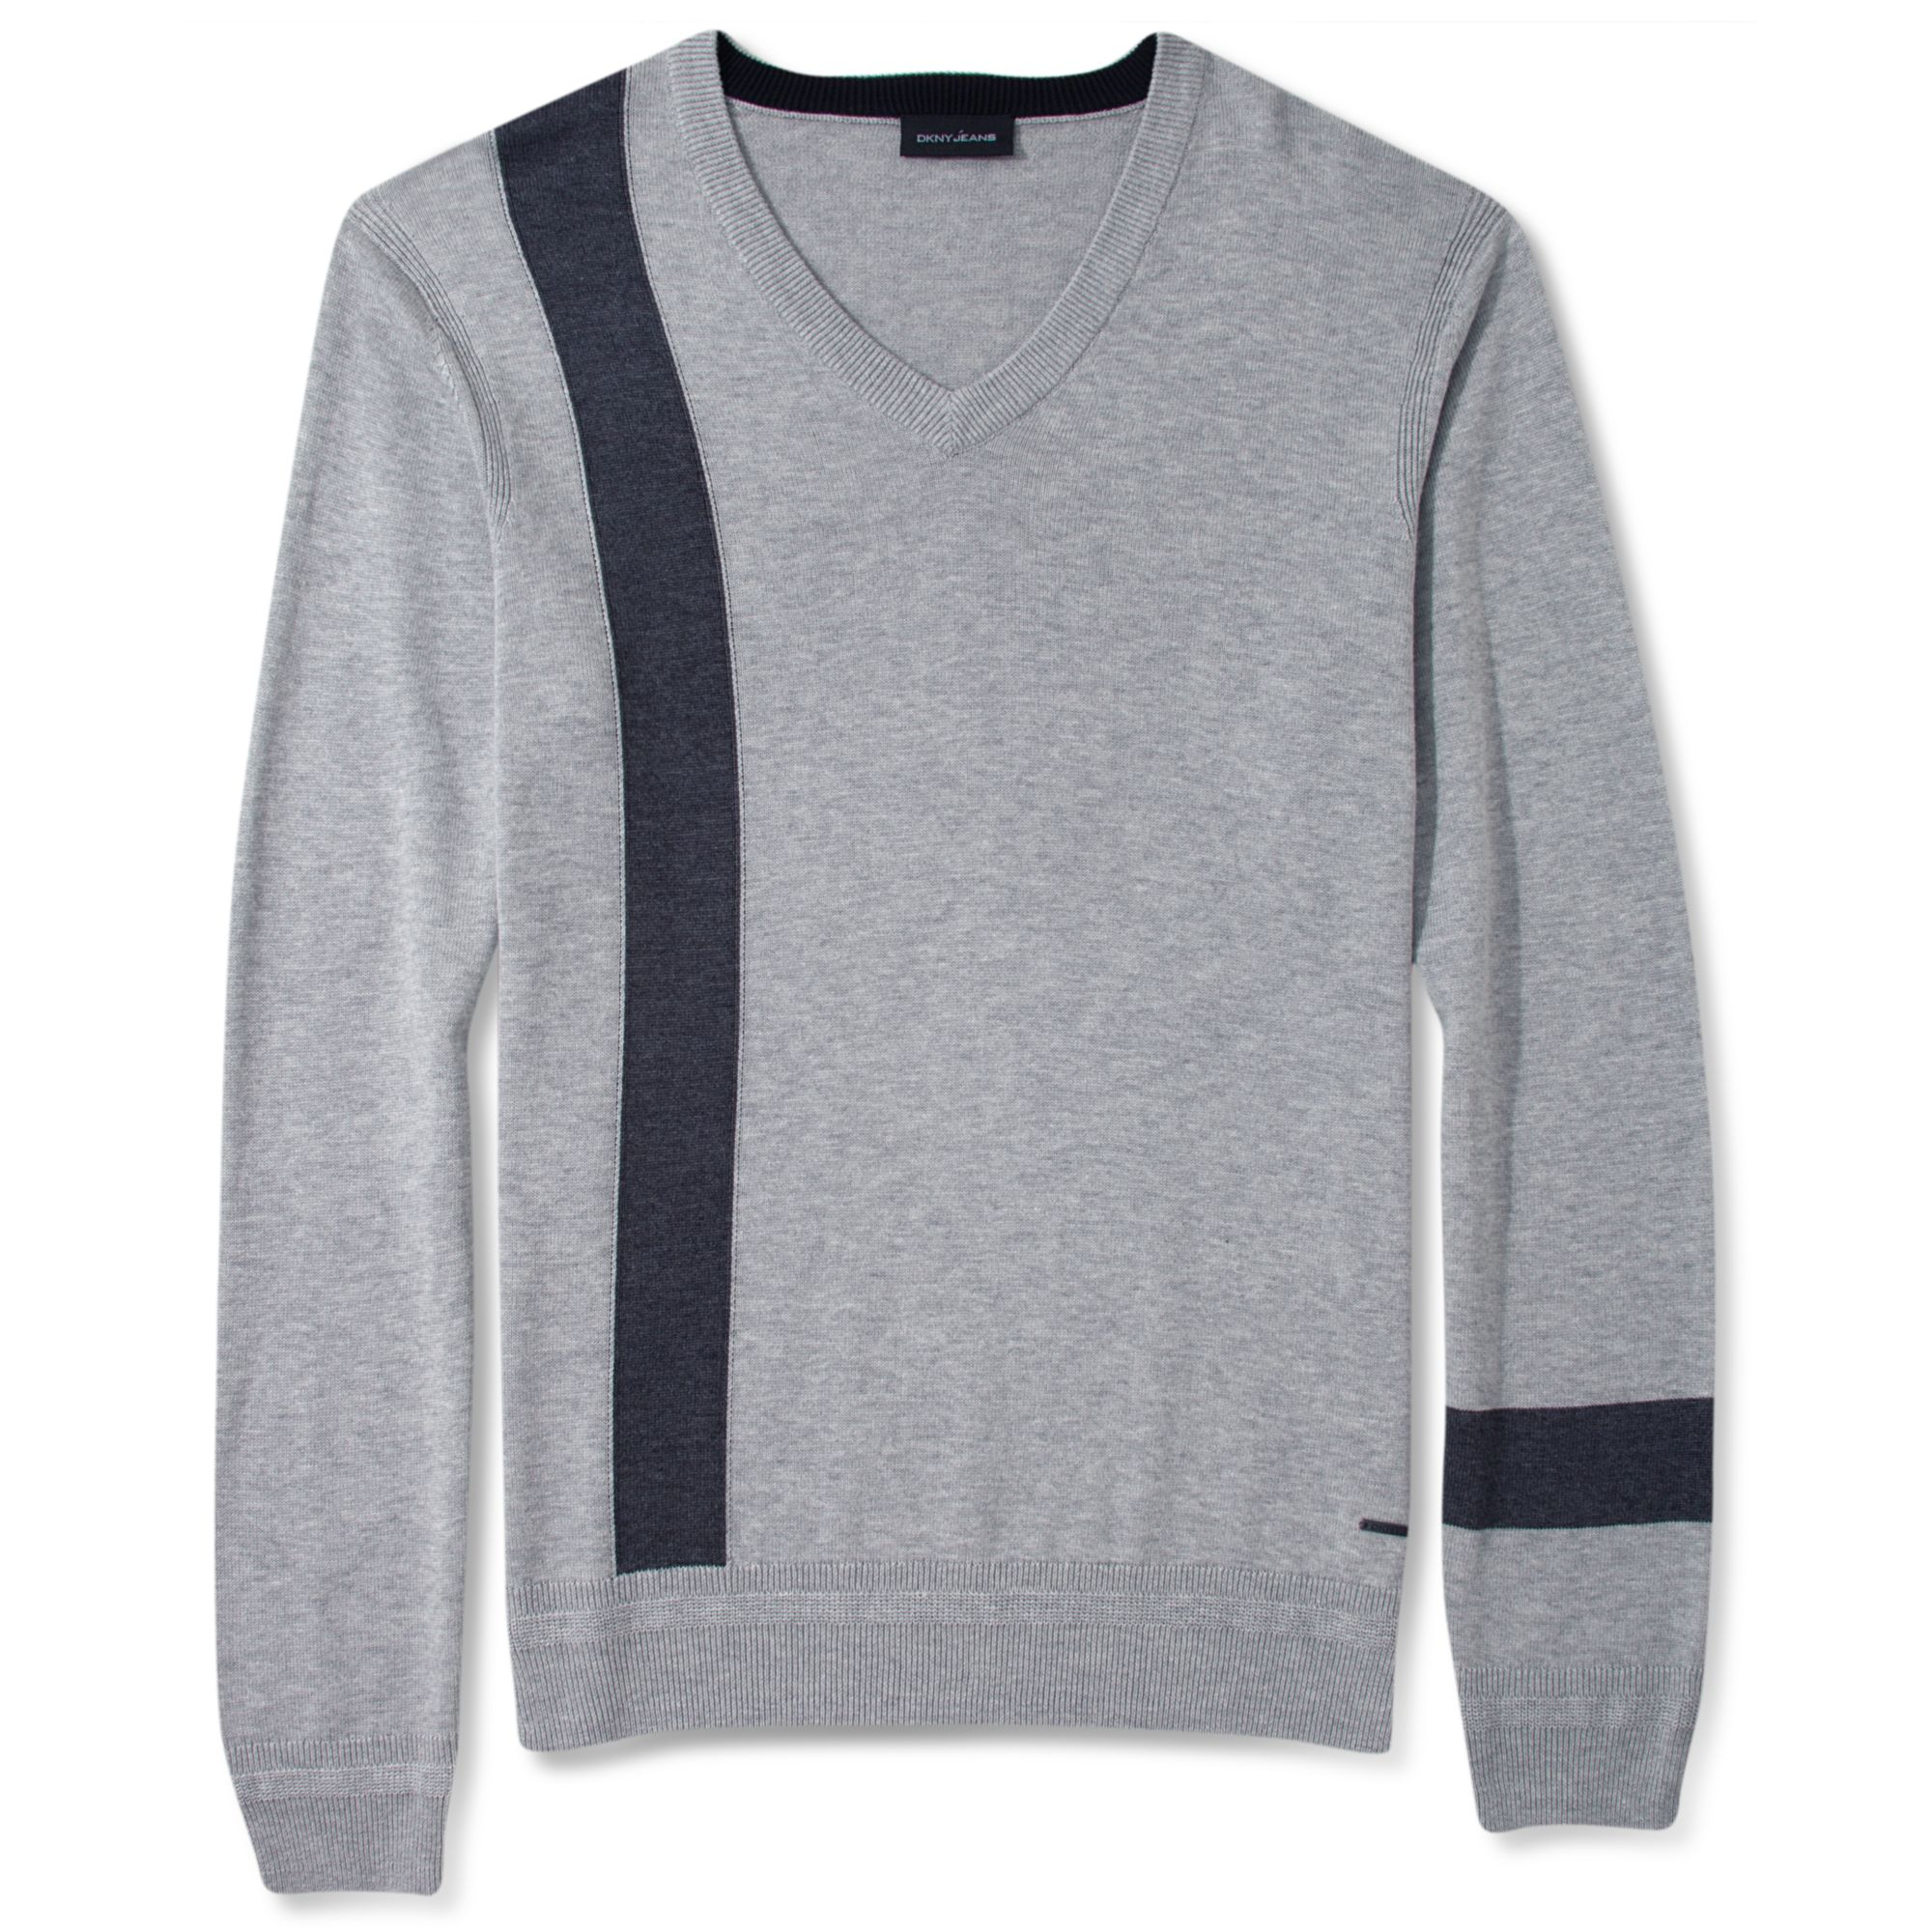 Lyst - Dkny Athletic Stripe Vneck Sweater in Gray for Men